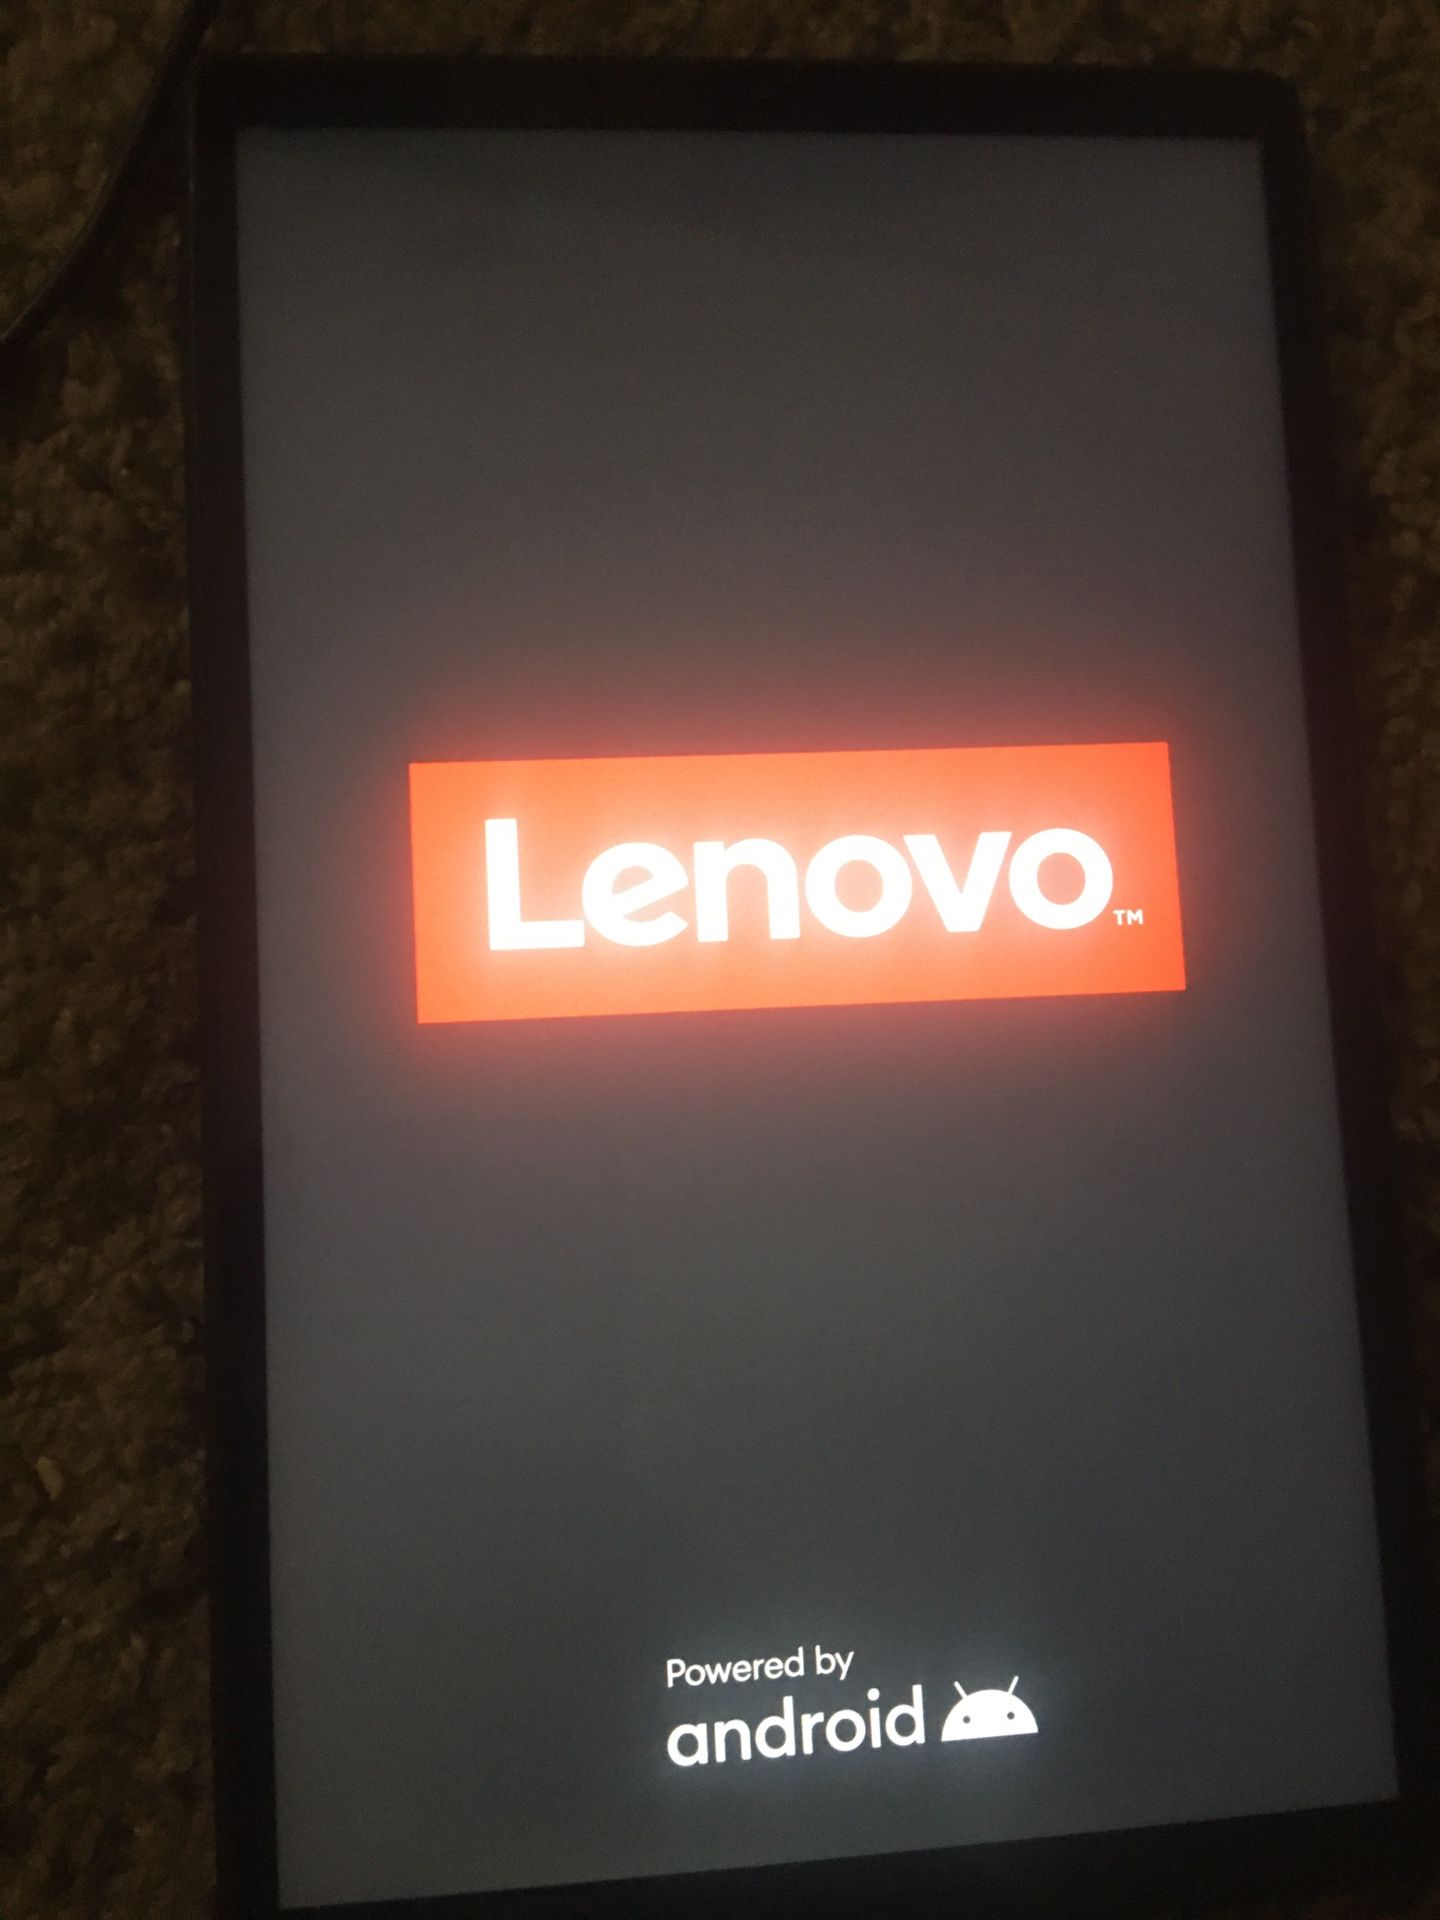  Lenova Tablet Stuck On Title Screen